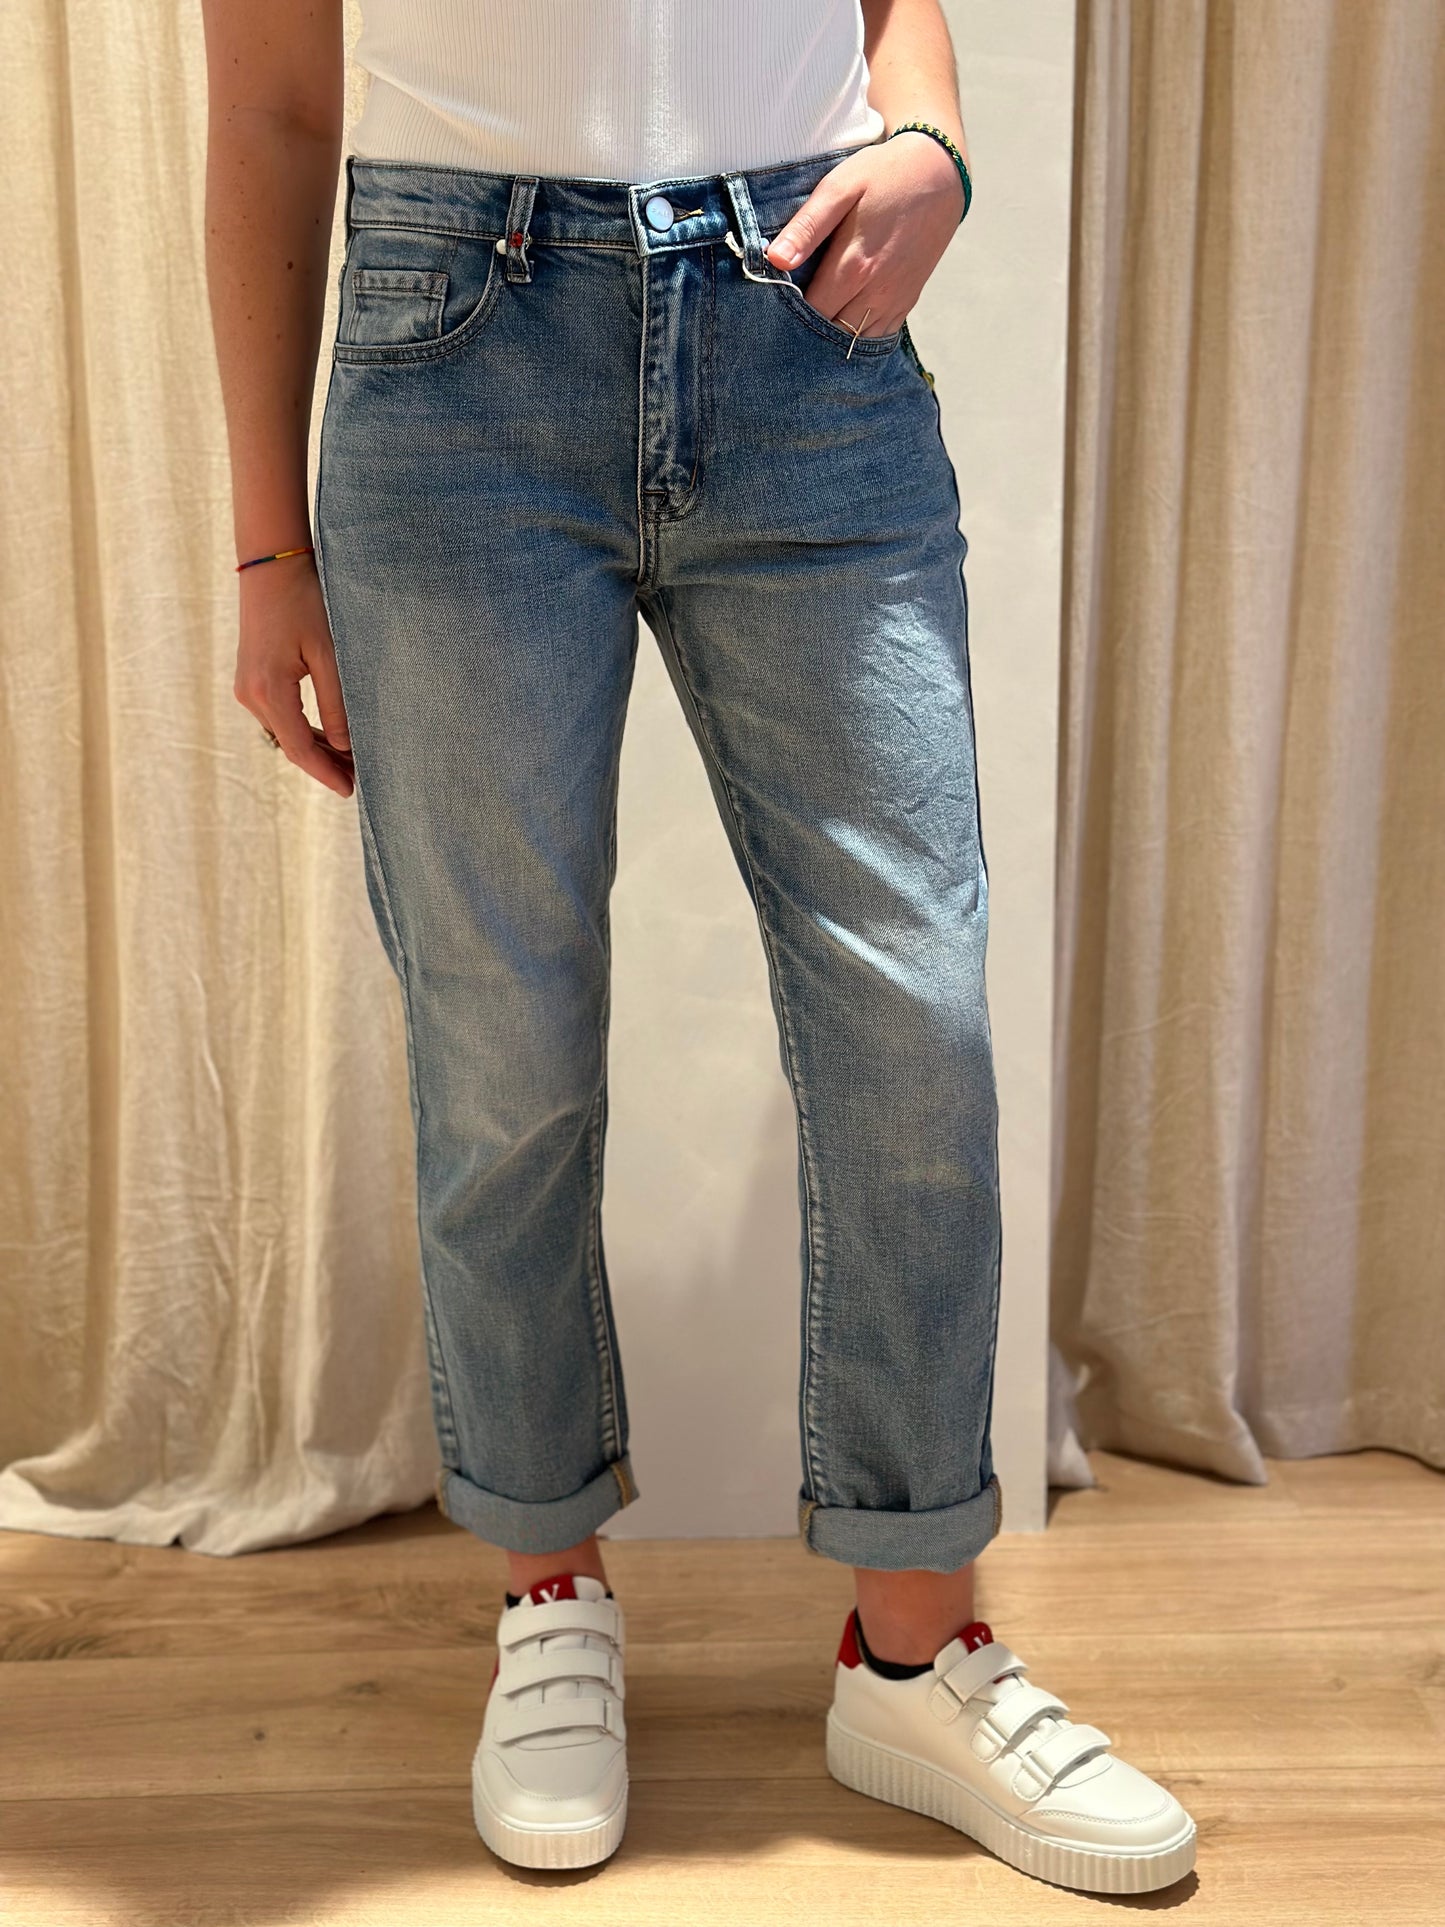 Patricia Blue - jeans